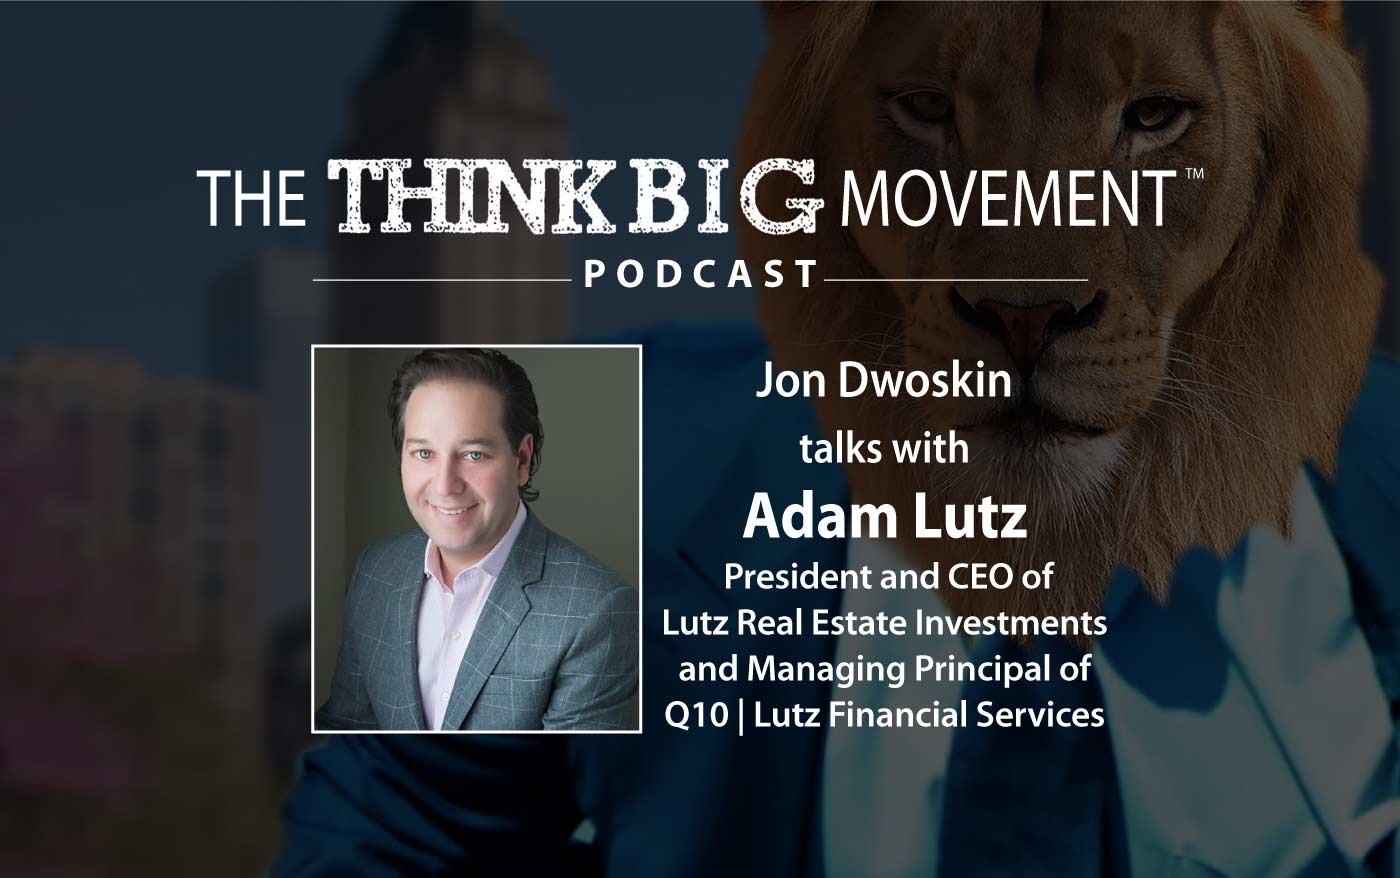 Think Big Movement Podcast - Jon Dwoskin Interviews Adam Lutz